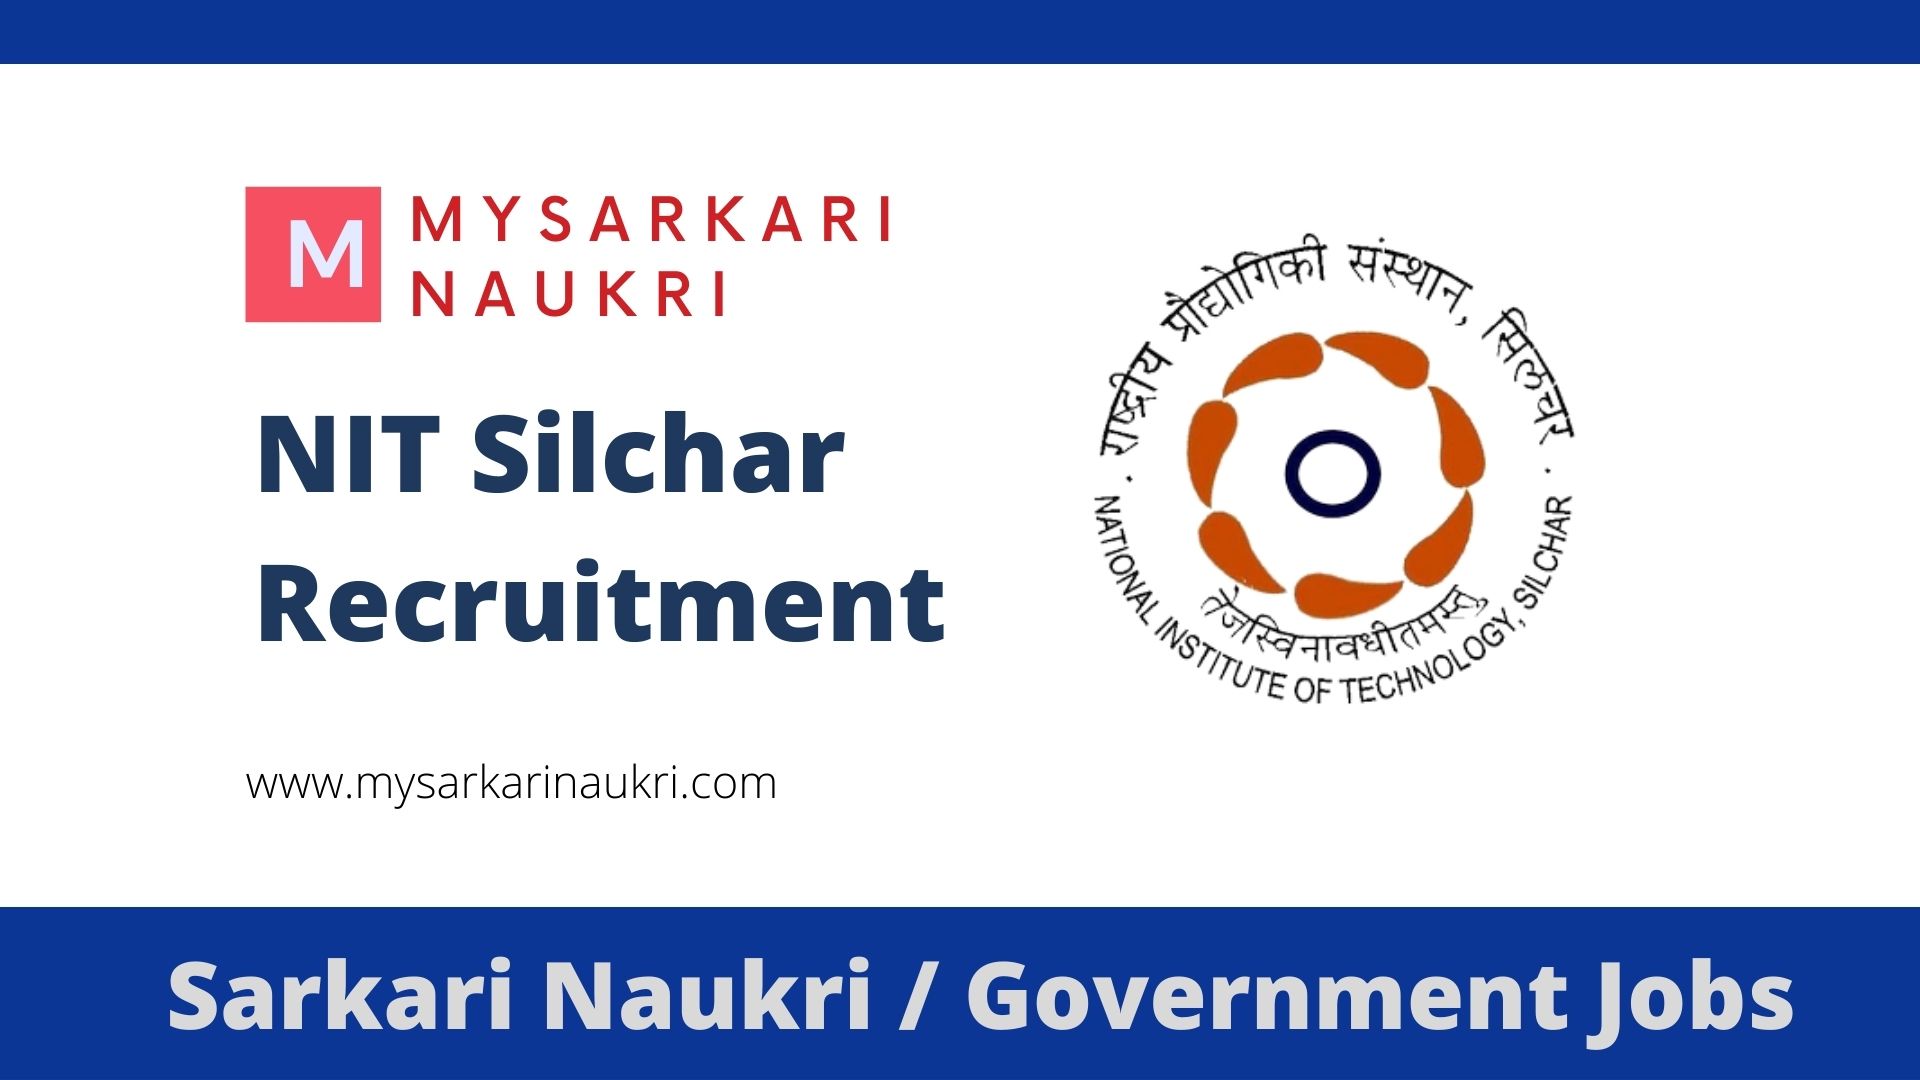 NIT Silchar Non-Teaching Recruitment 2023 – 109 Vacancy